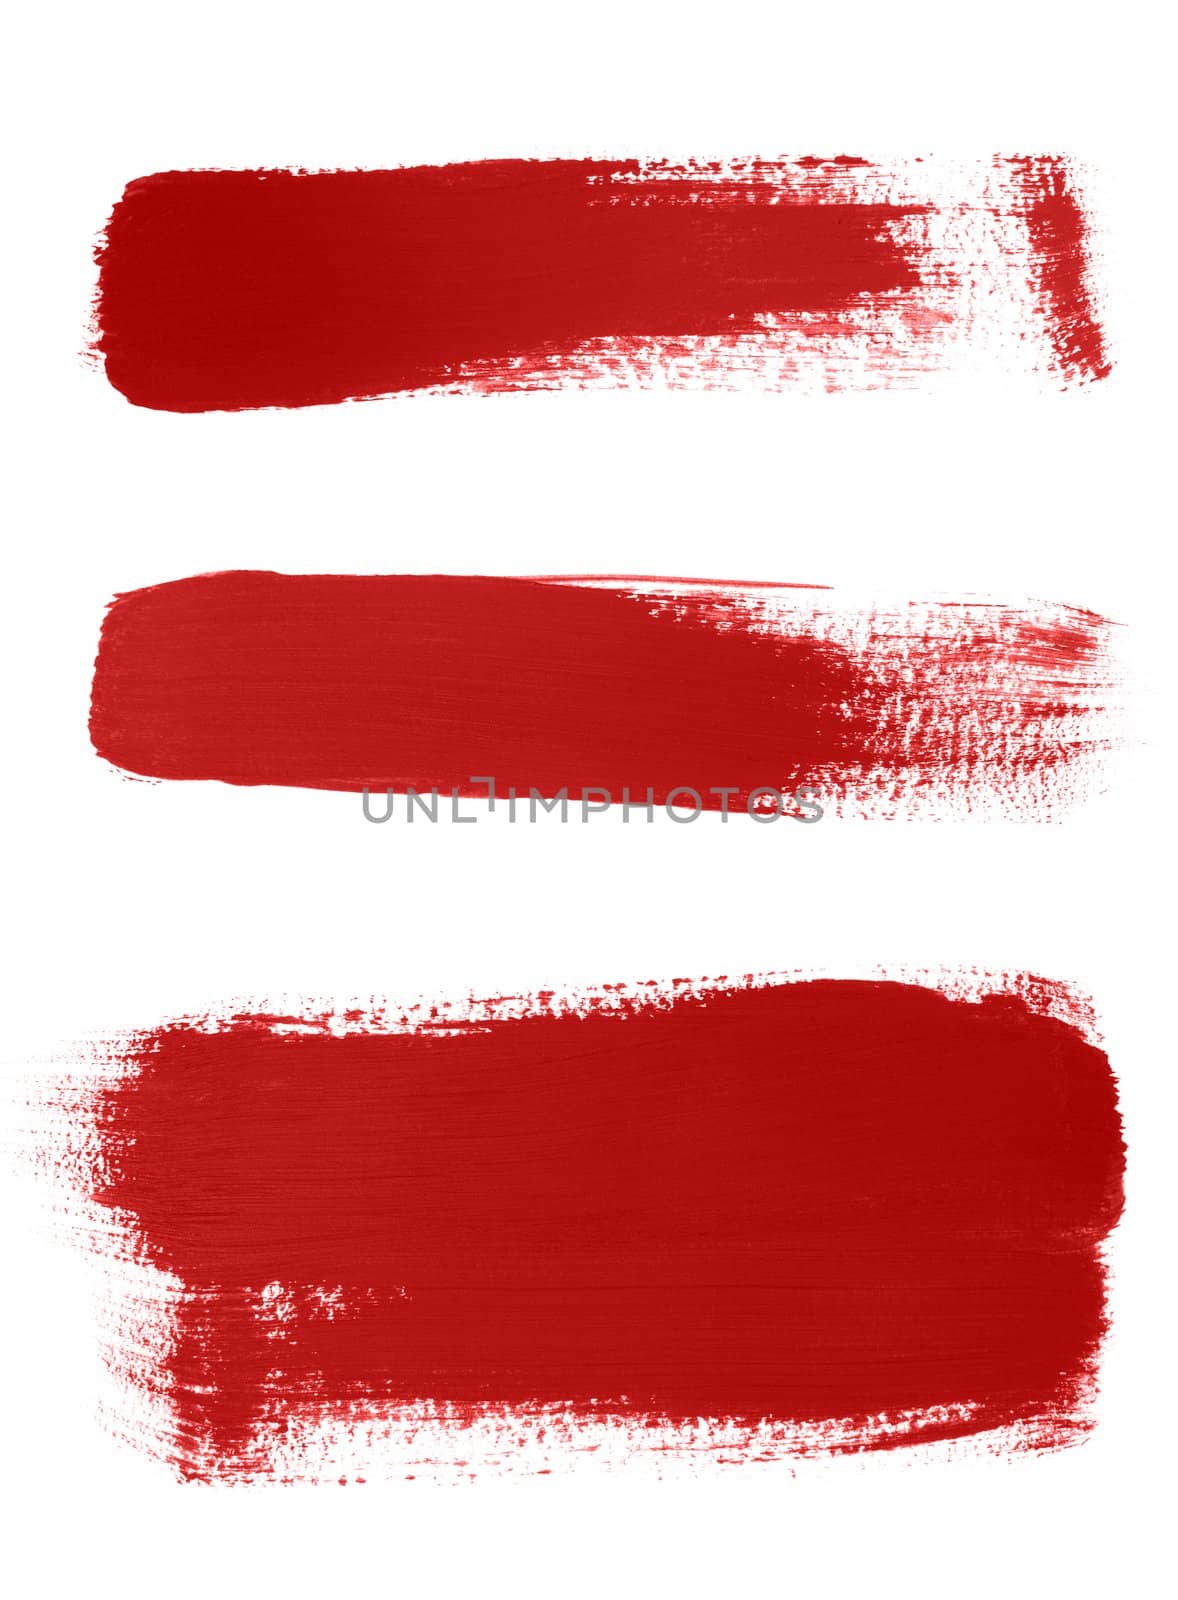 Red brush strokes on white background by anikasalsera